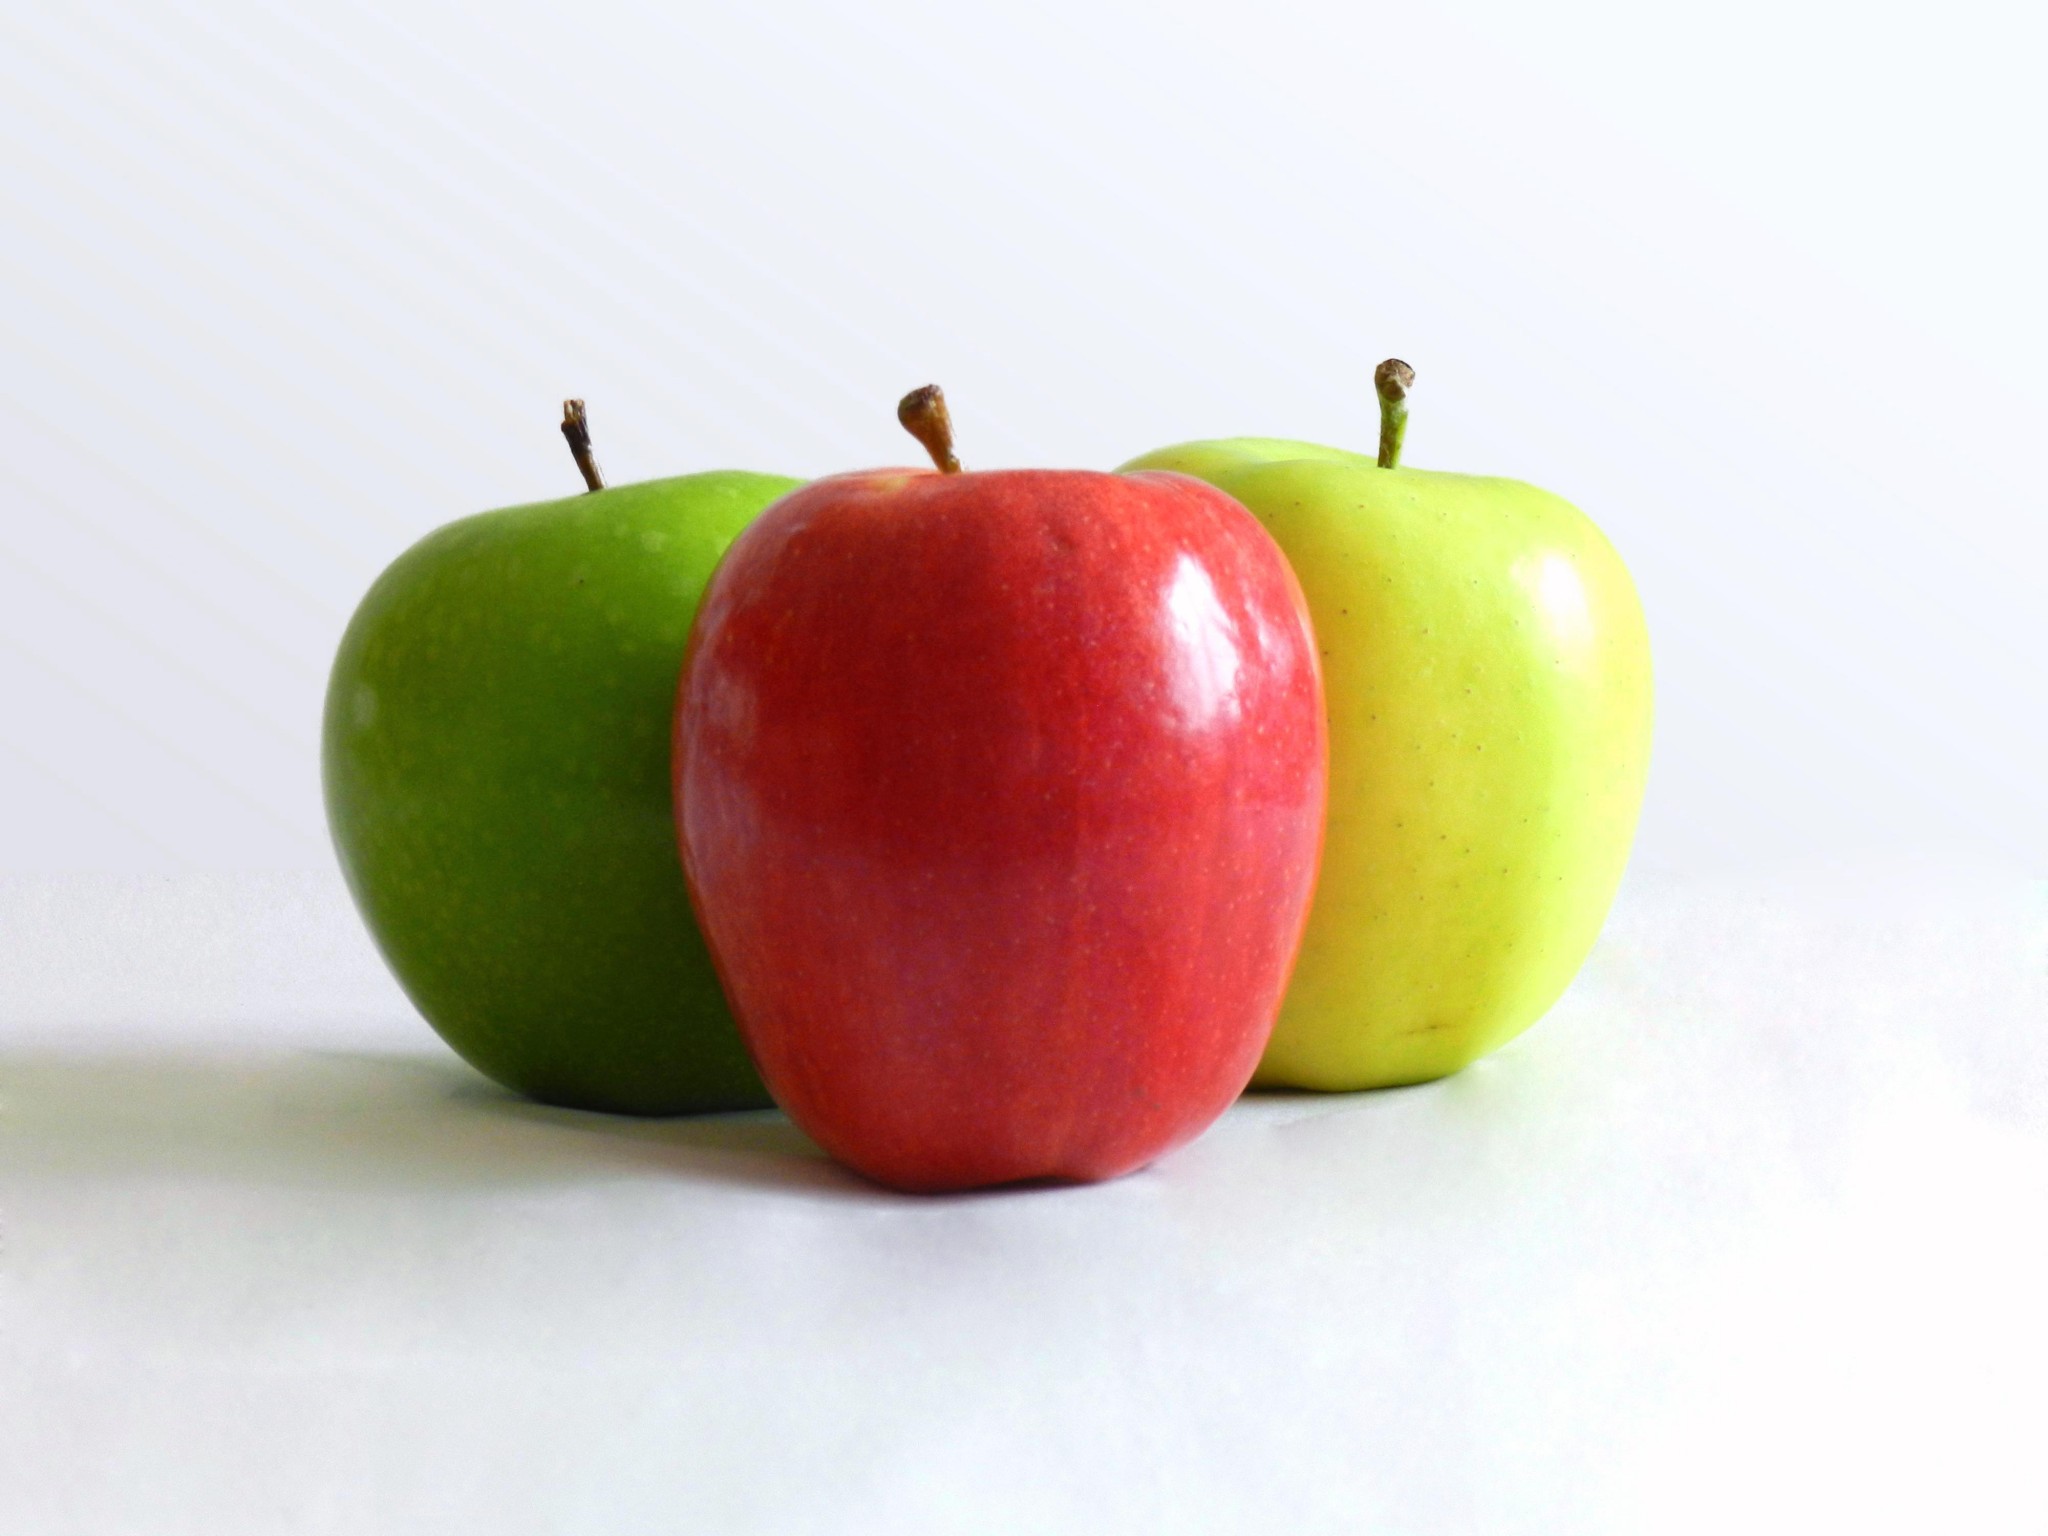 North Bay Produce voluntarily recalls fresh apples due to Listeria monocytogenes